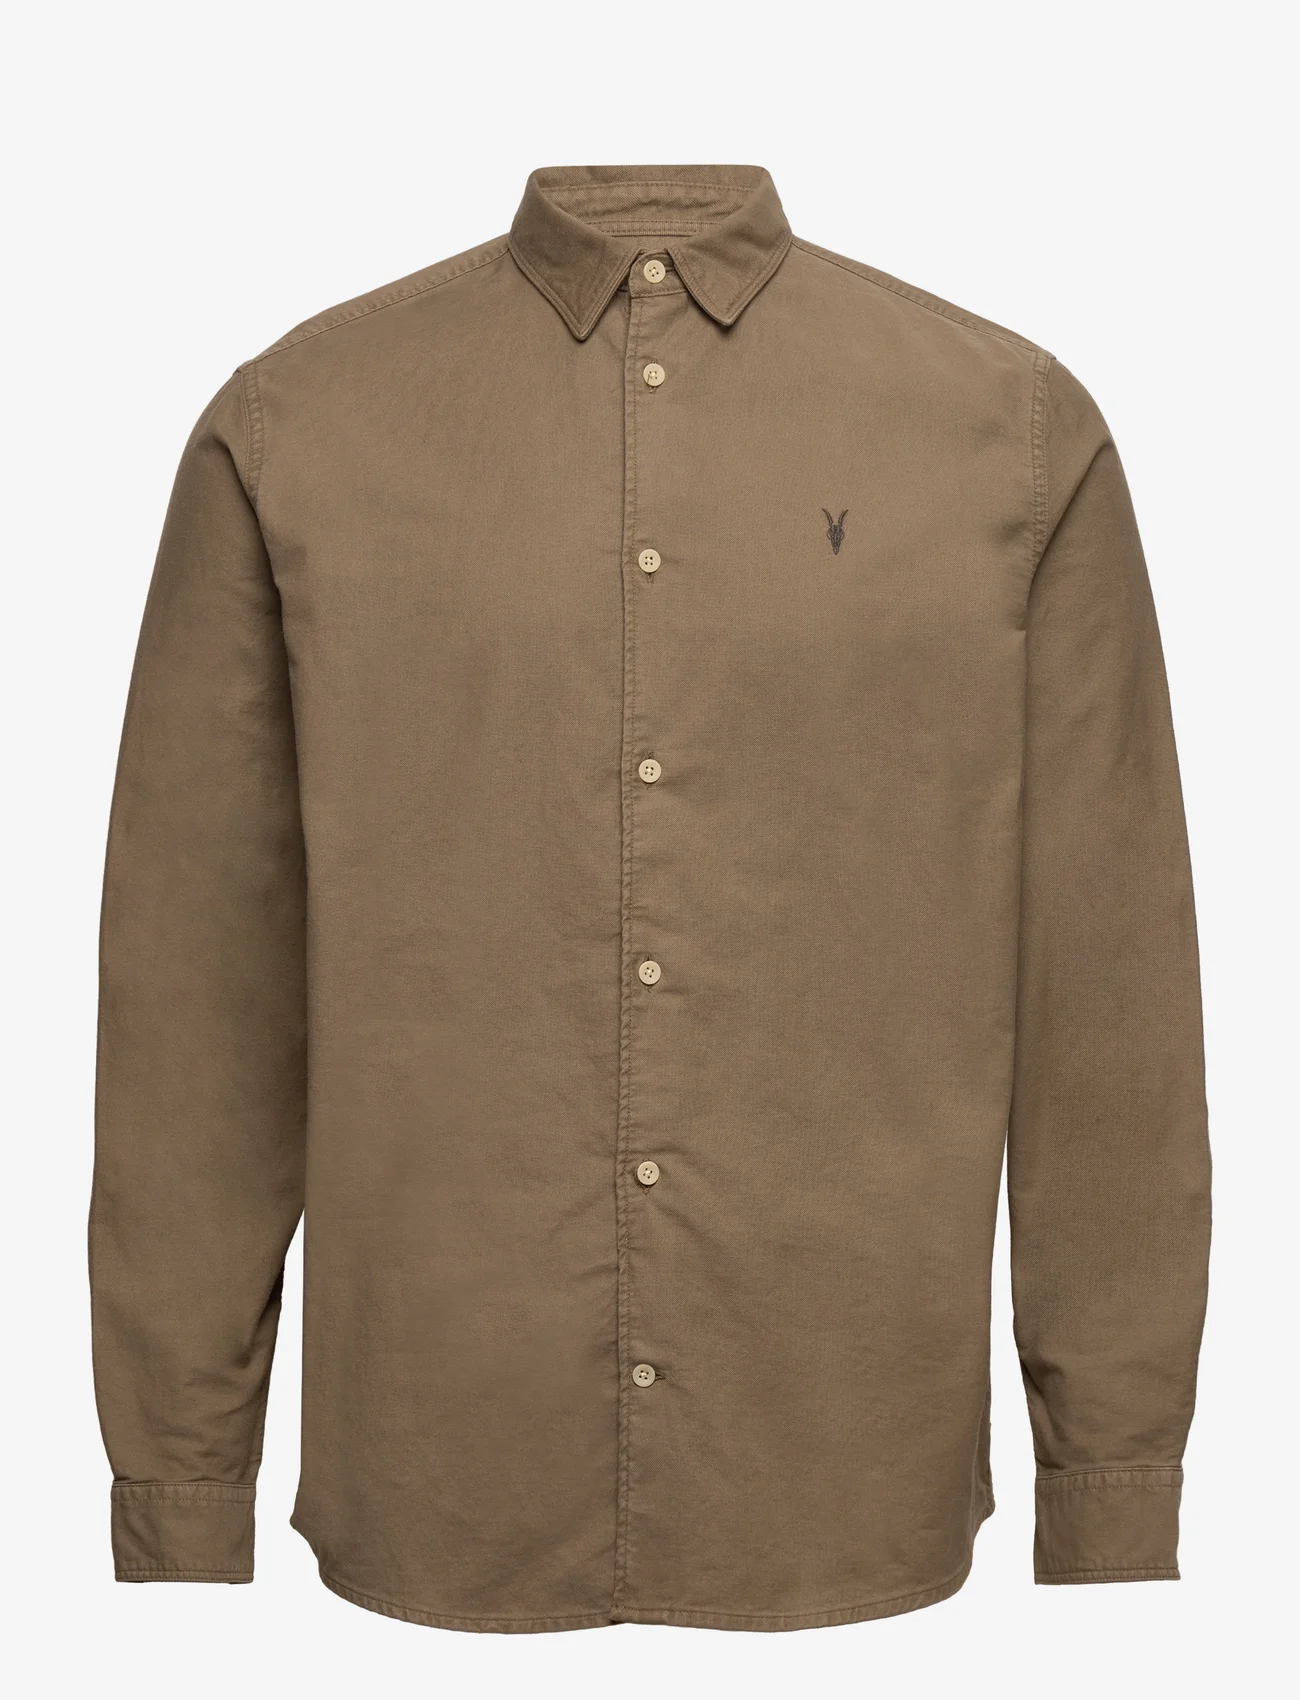 AllSaints - HERMOSA LS SHIRT - basic shirts - worn brown - 0